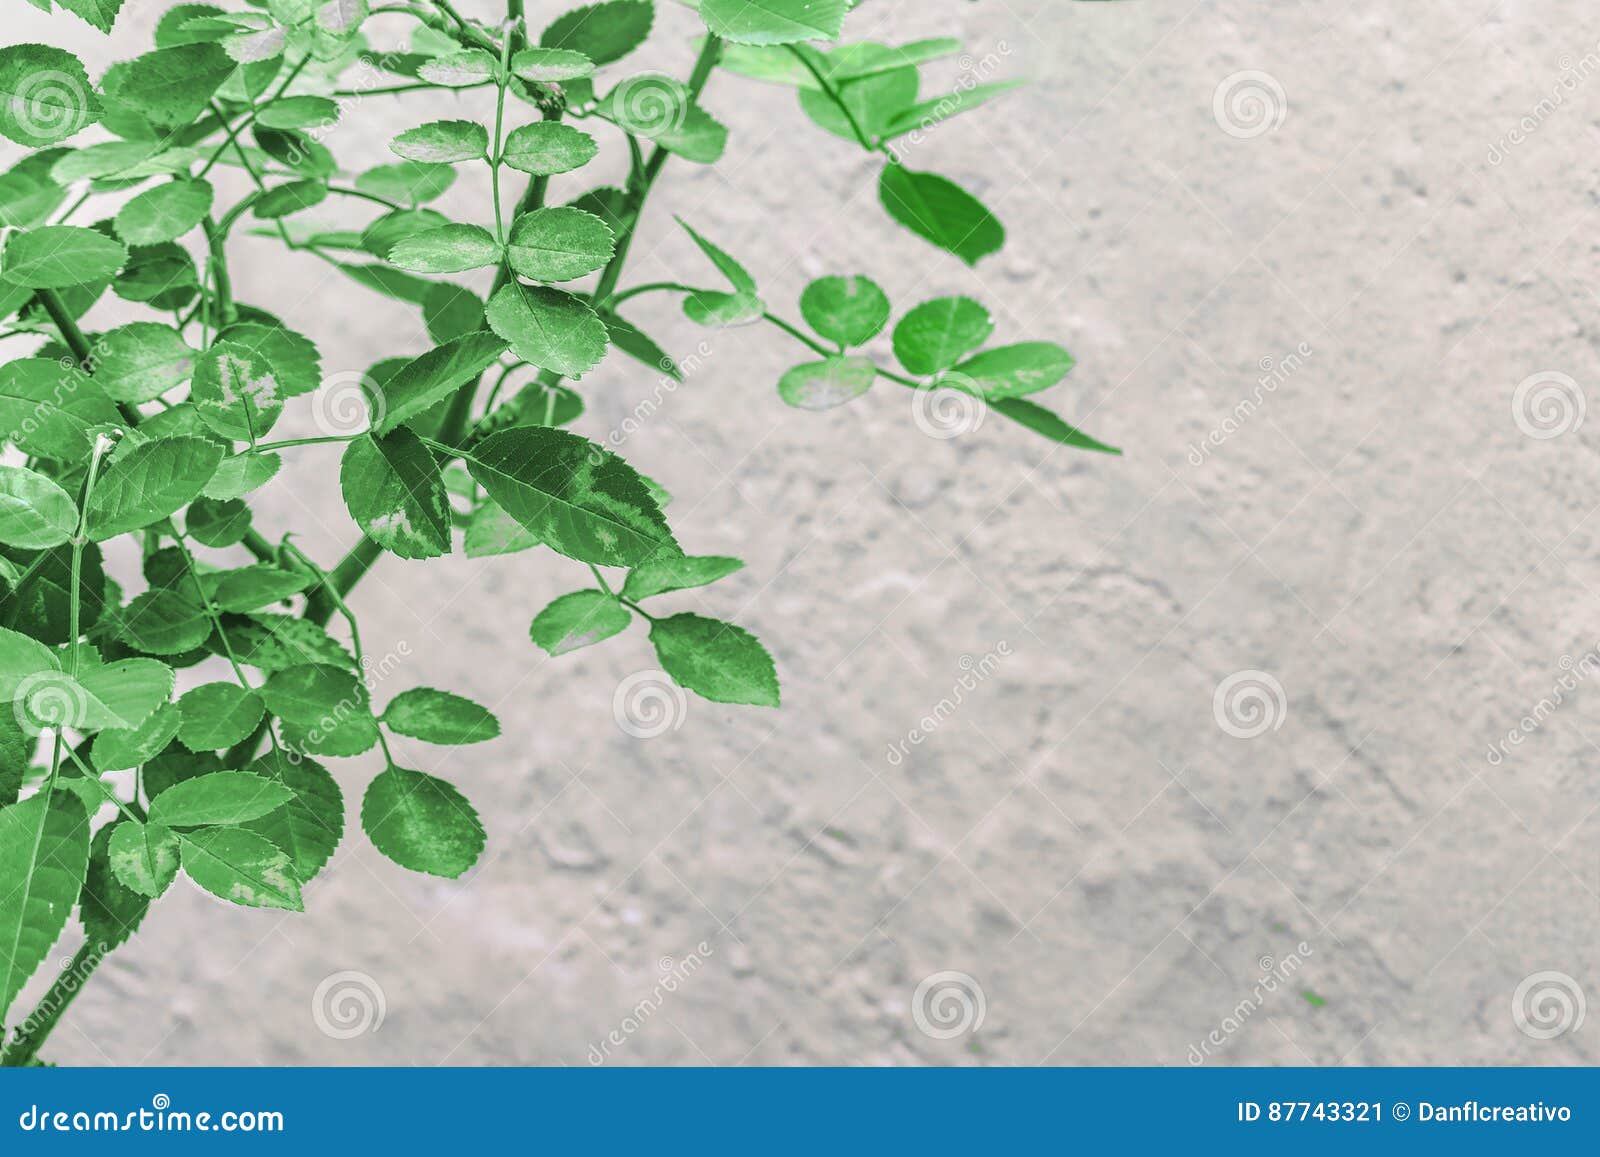 Plants Over Wall Background Stock Image - Image of botanical, leaves